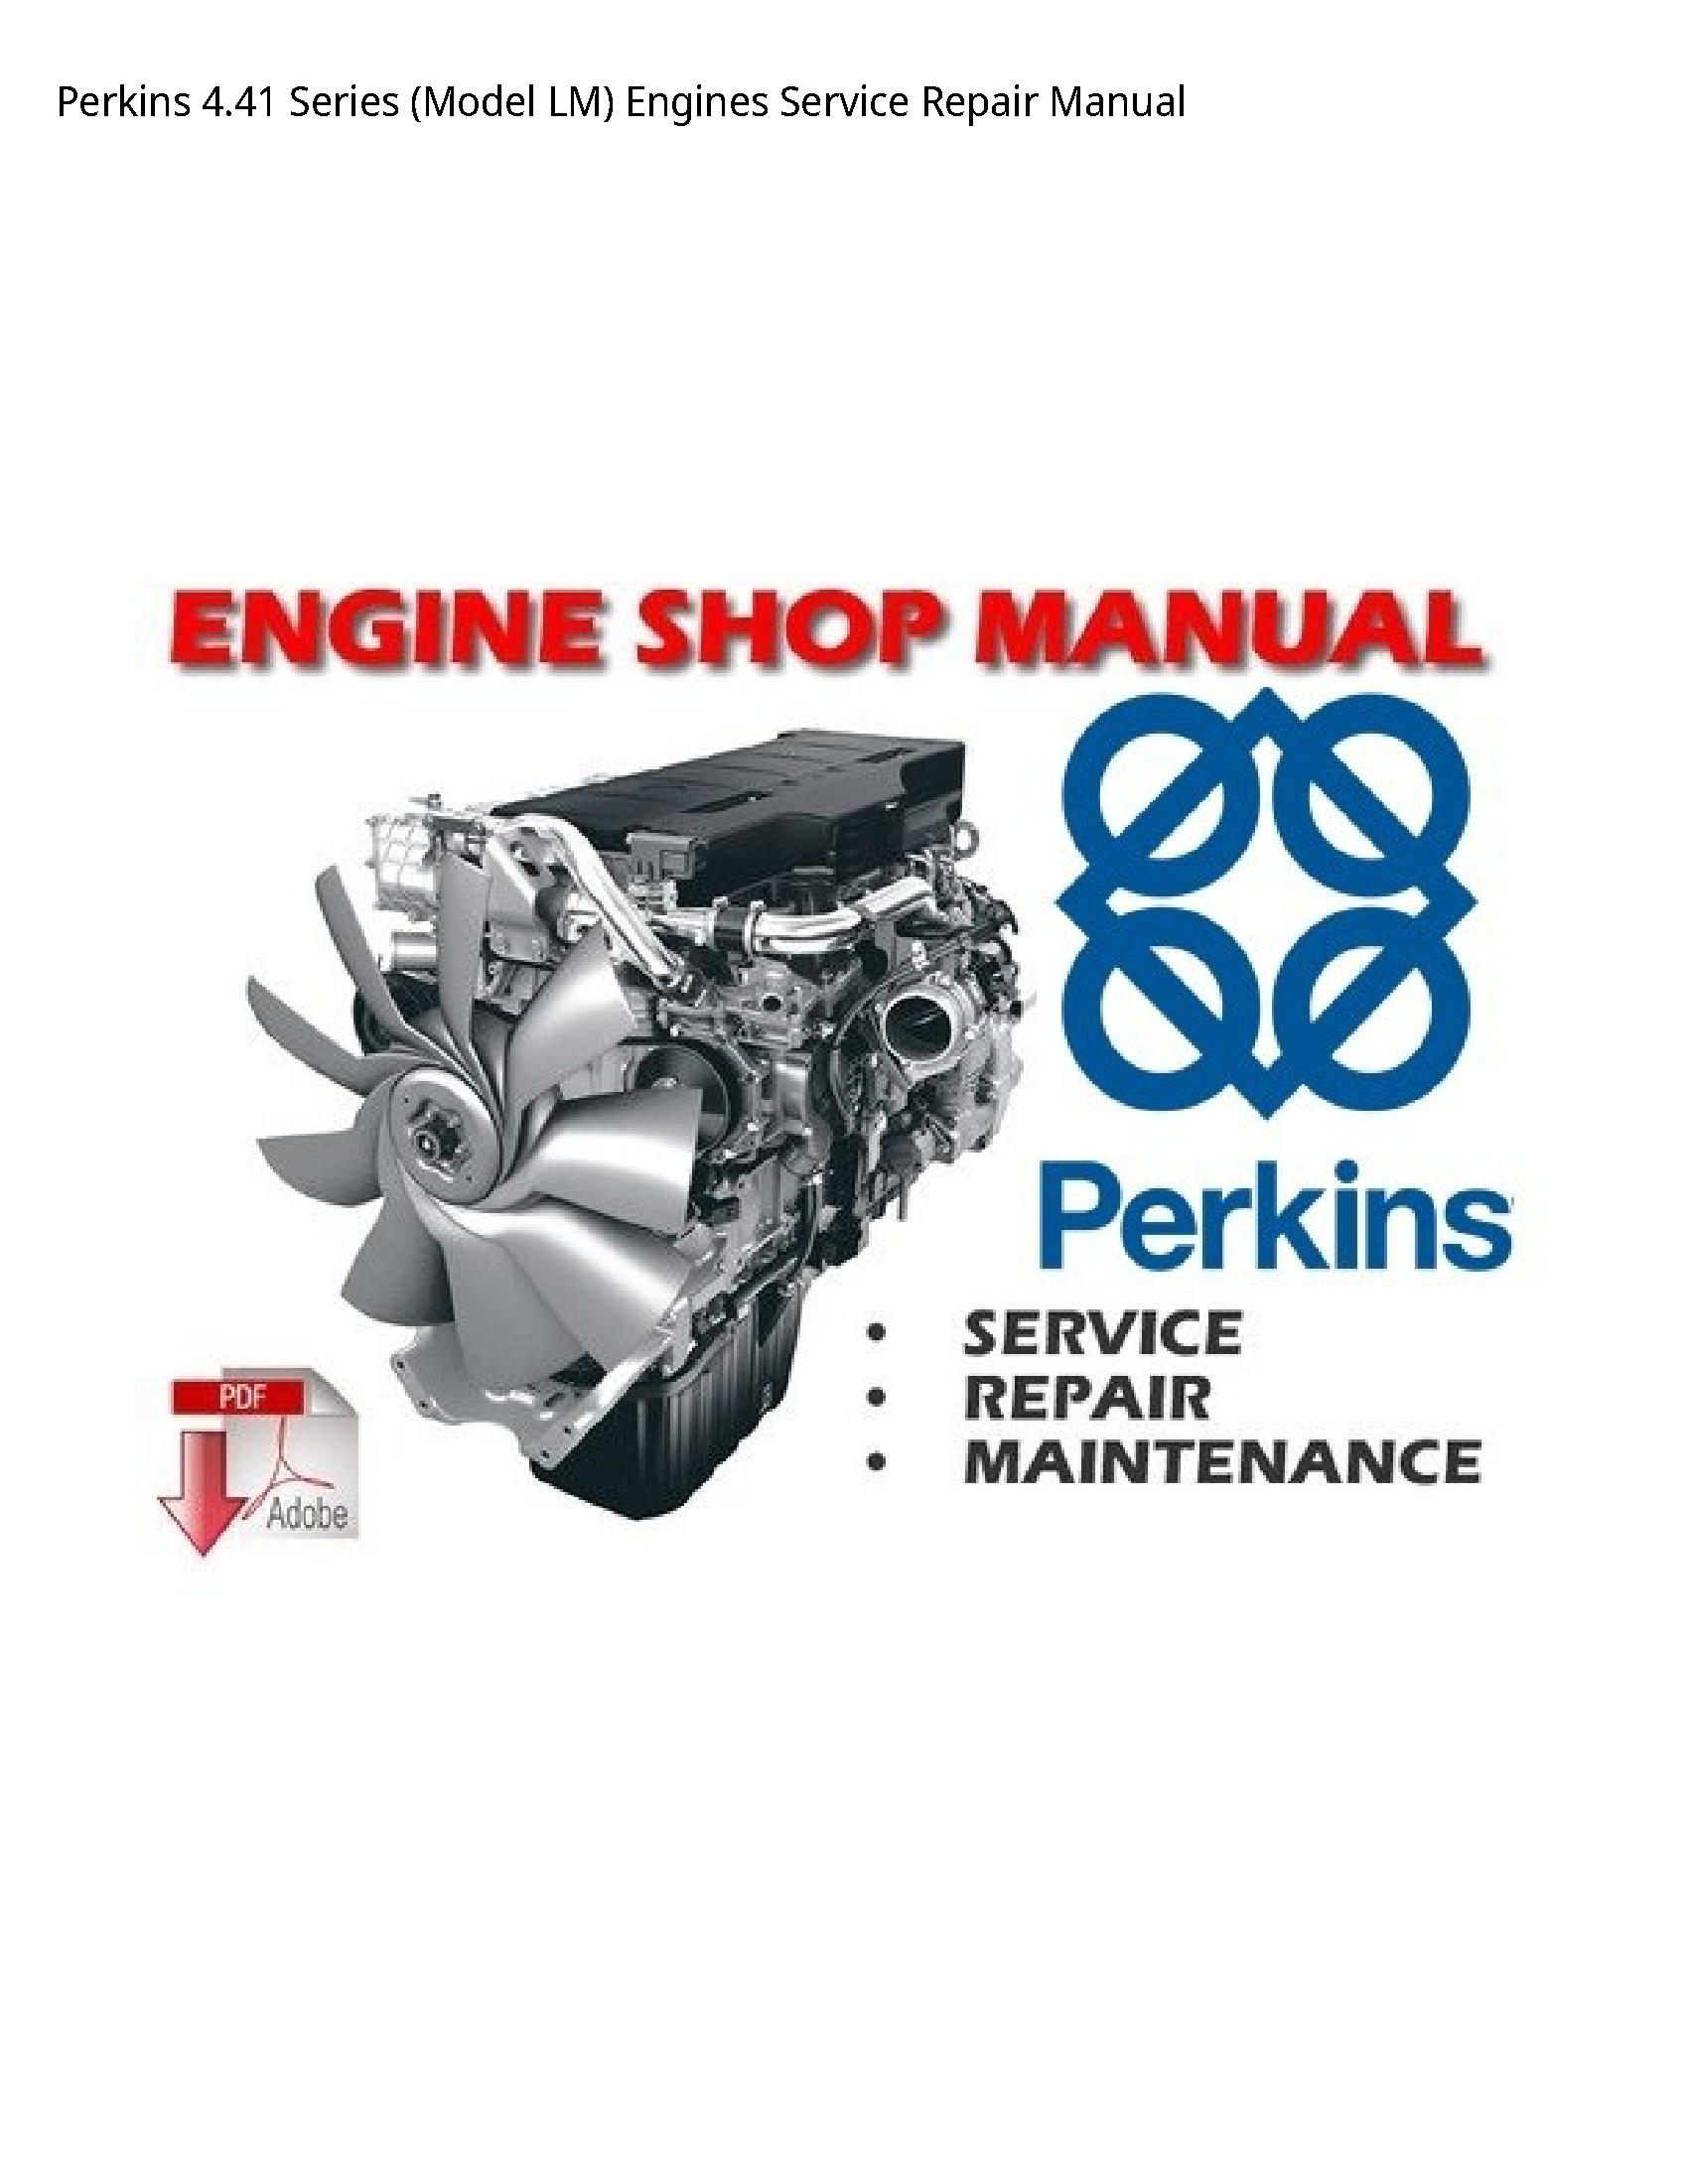 Perkins 4.41 Series (Model LM) Engines manual